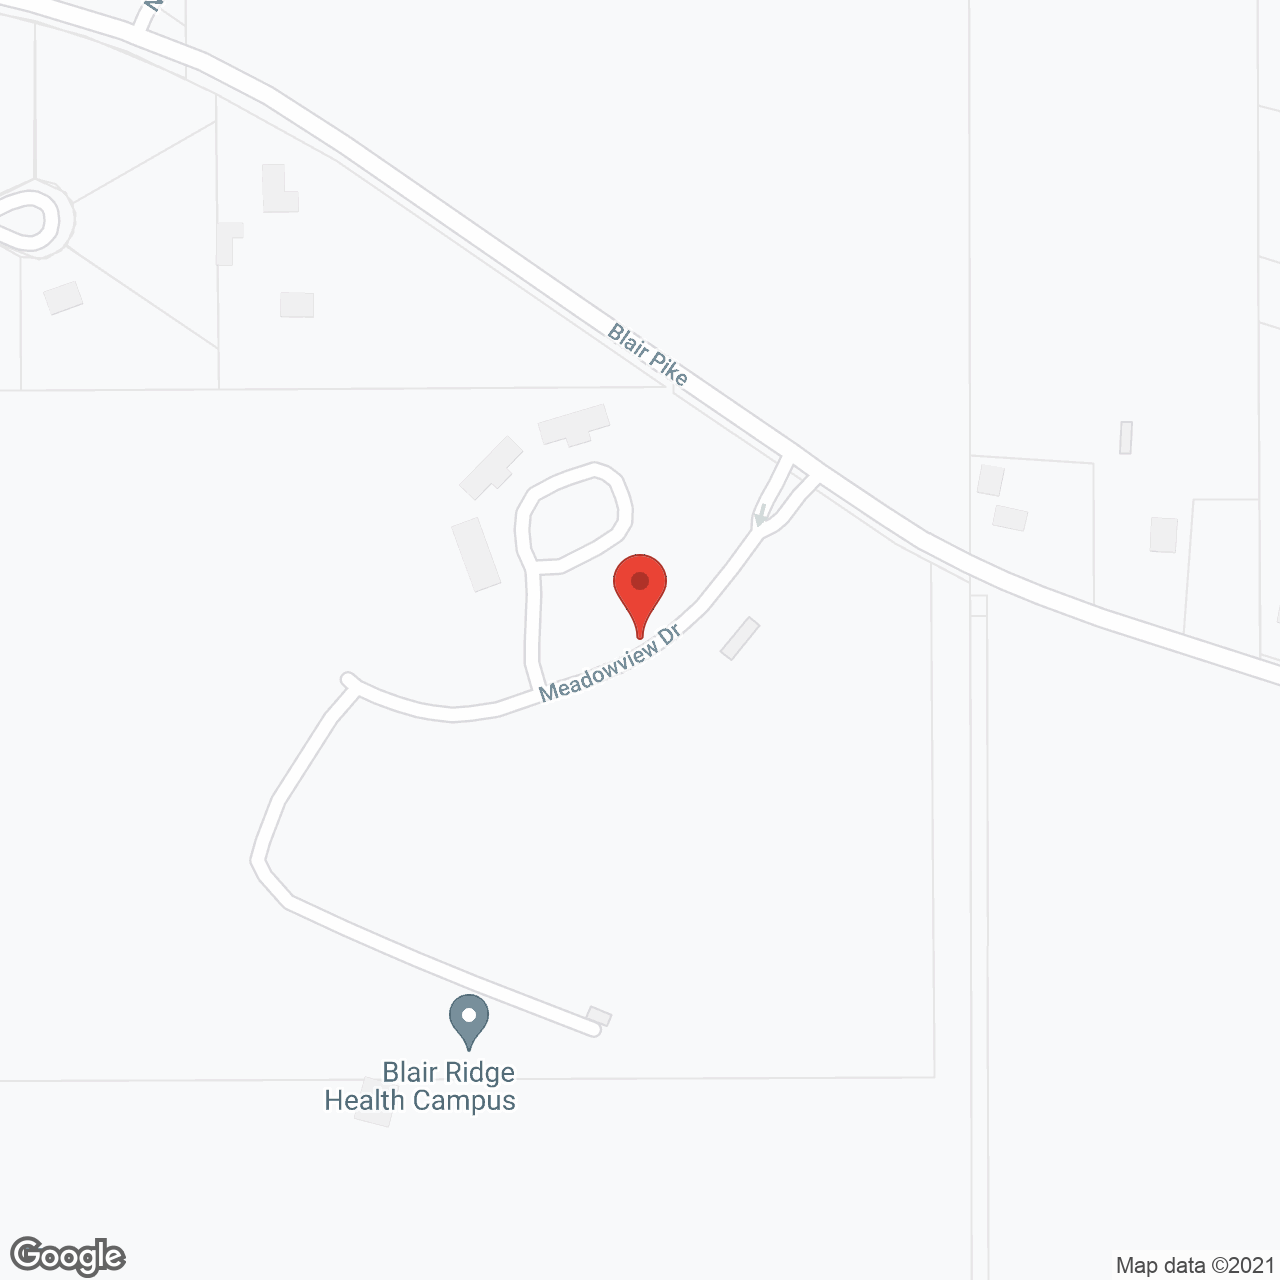 Blair Ridge Health Campus in google map